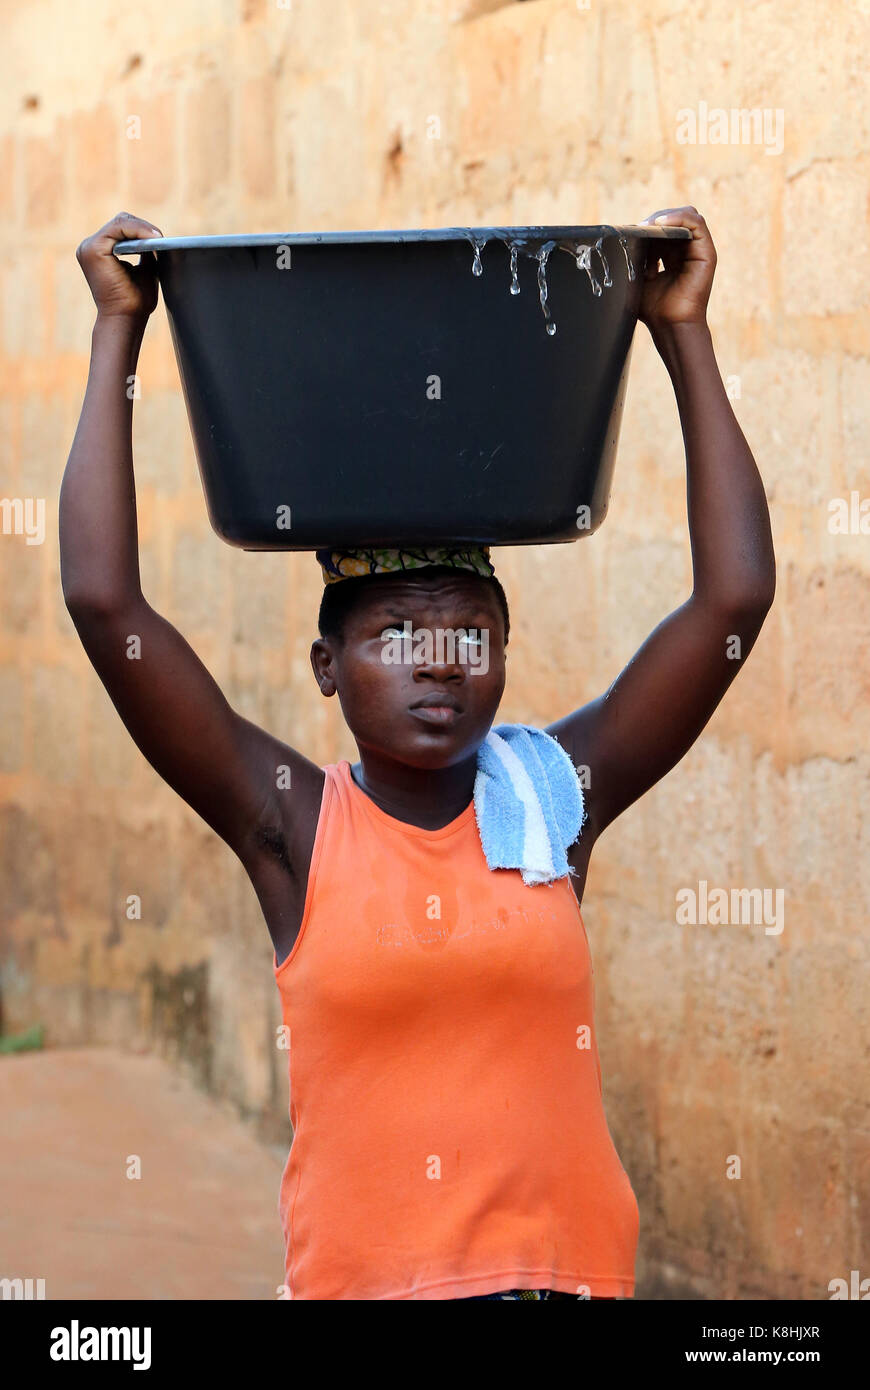 Vida de aldea africana. Tarea de agua. Niña africana que lleva una cuenca de agua en la cabeza. togoville. togo. Foto de stock